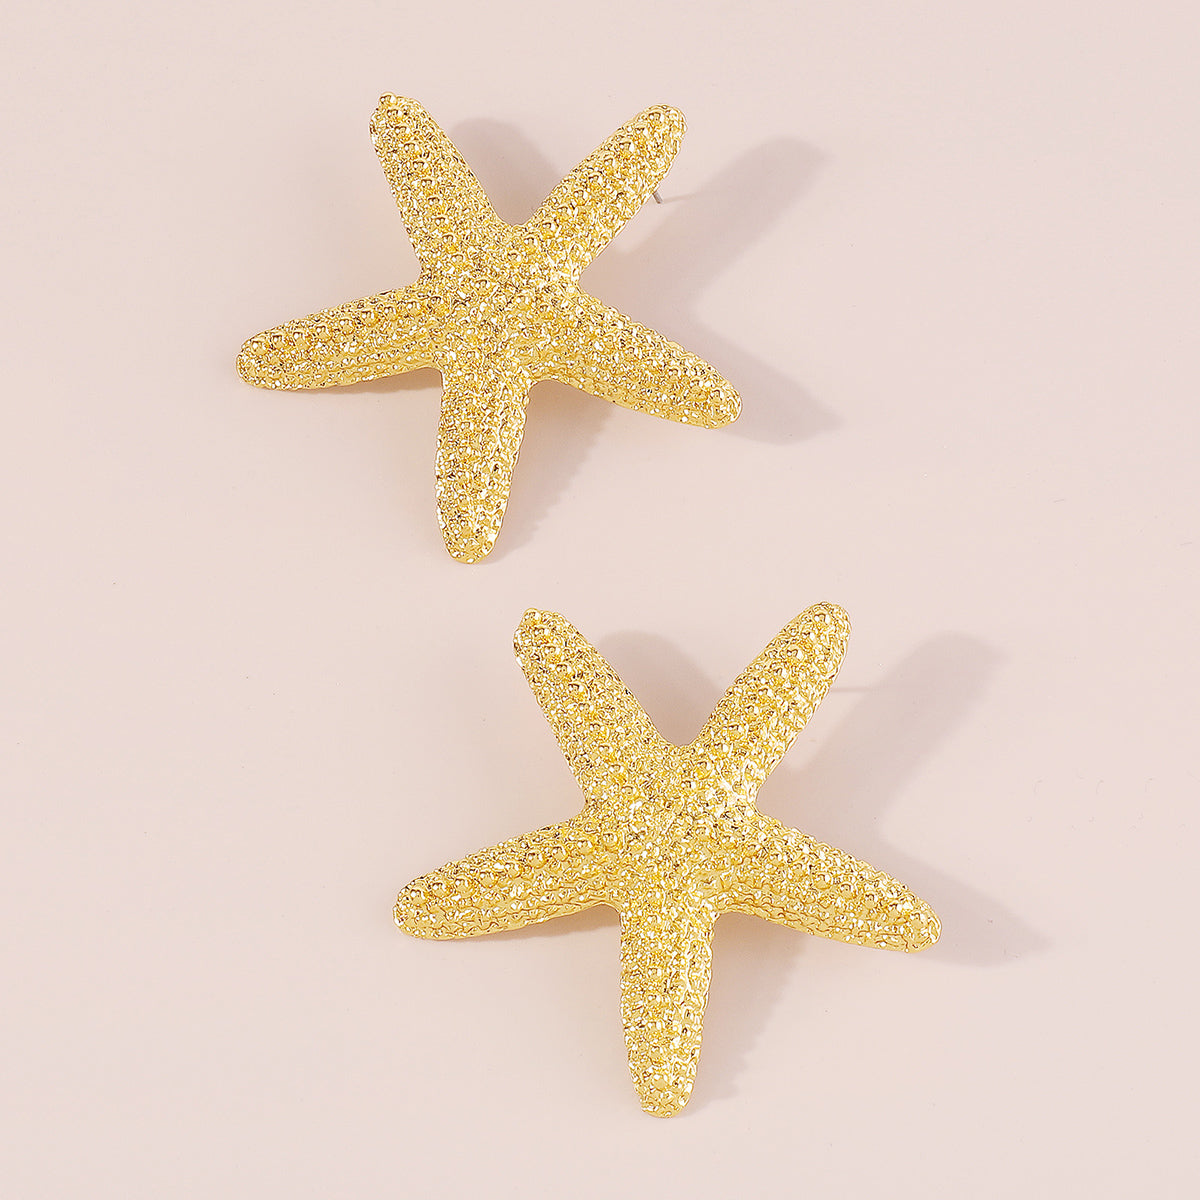 E11778 Large Metal Starfish Stud Earrings